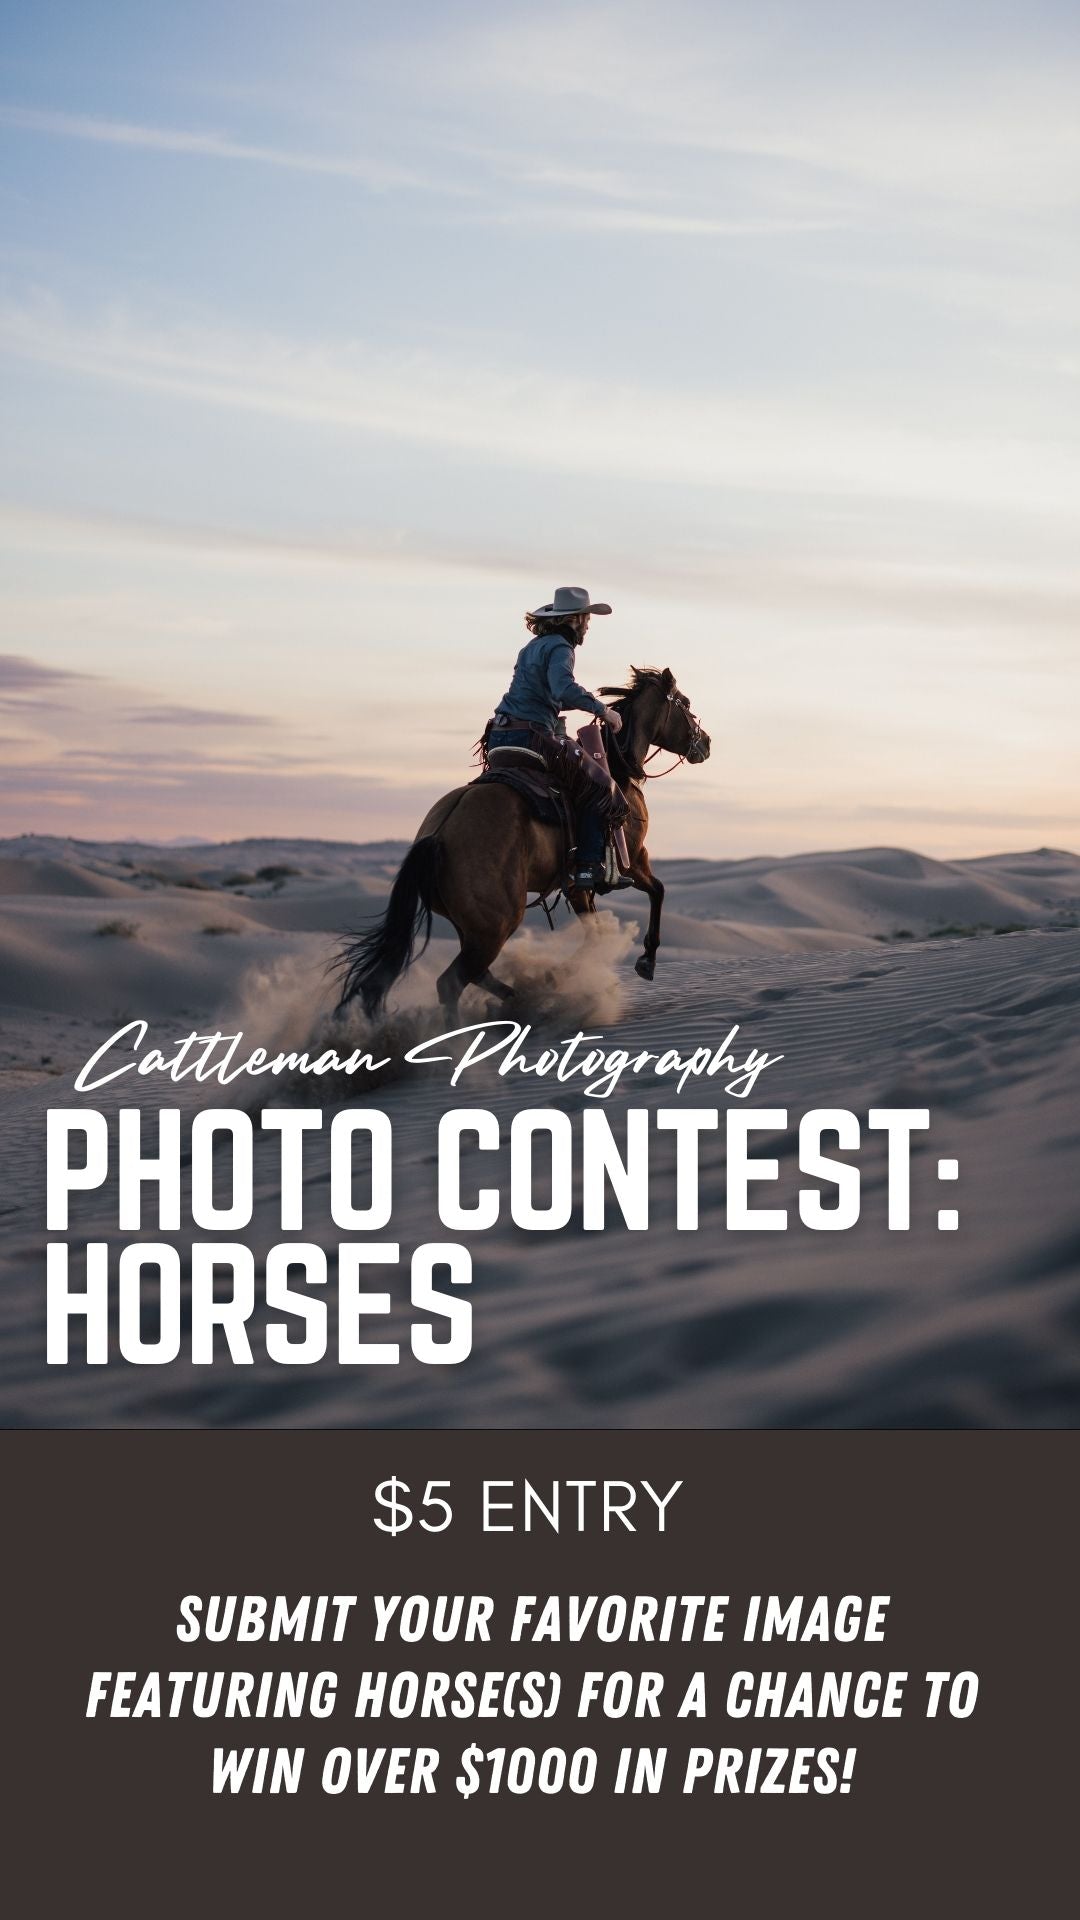 Cattleman Photo Contest - HORSES